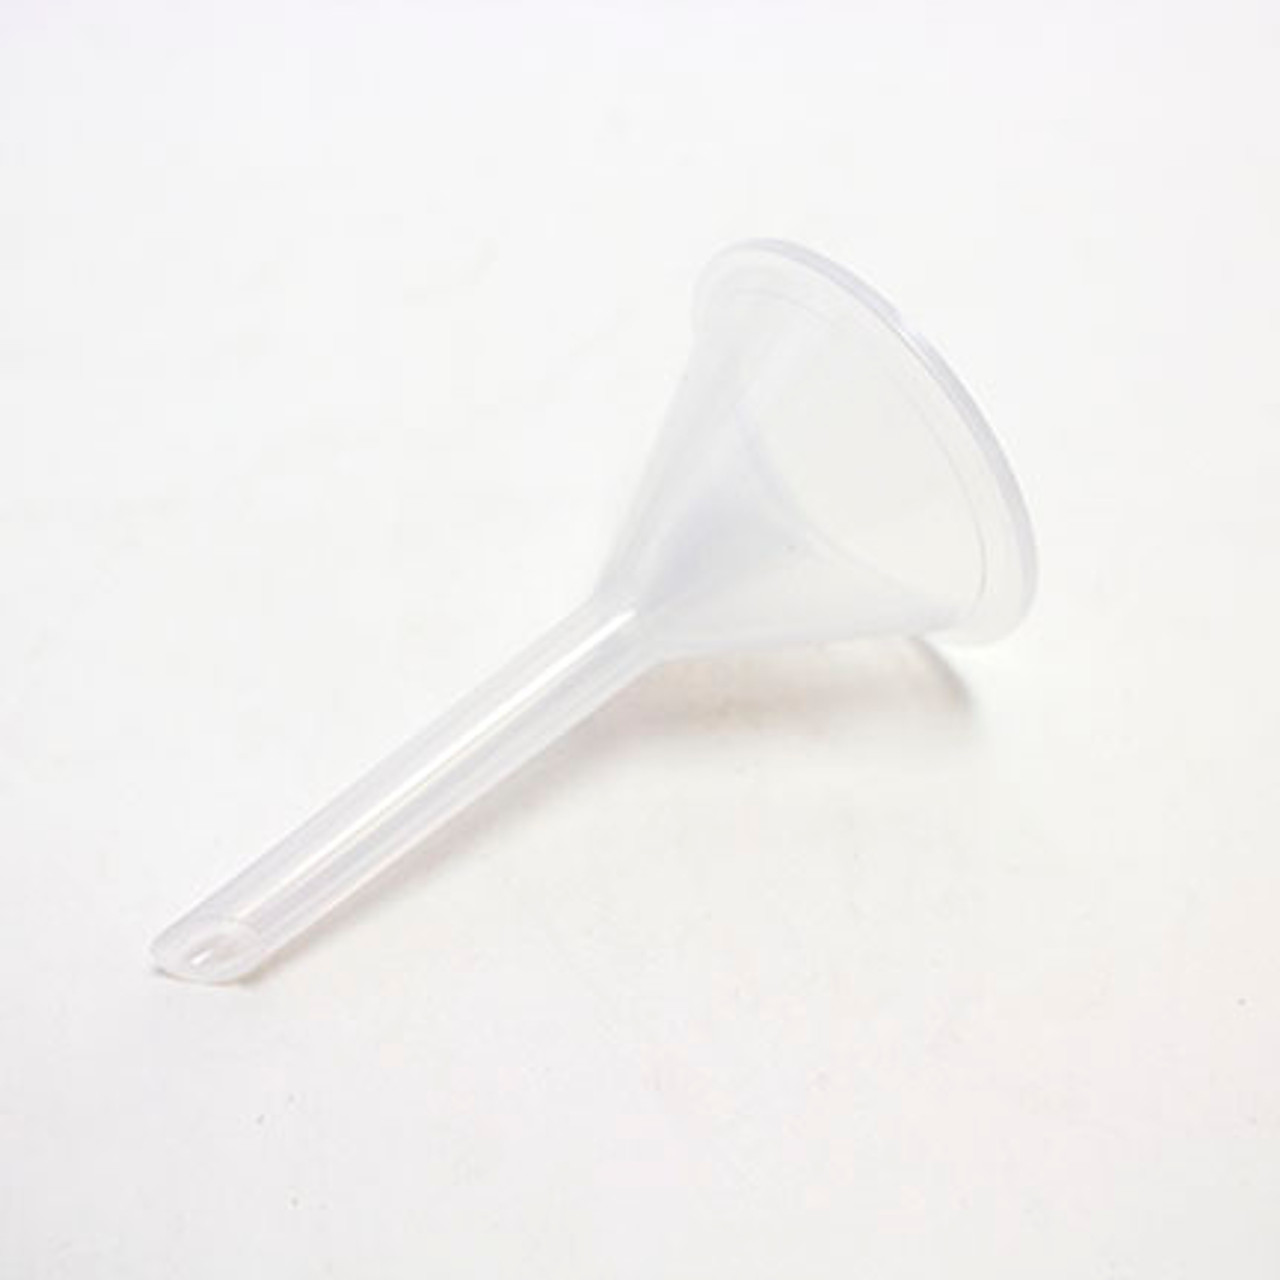 Long Stem Funnel, (Medium) 100 mm,  Polypropylene